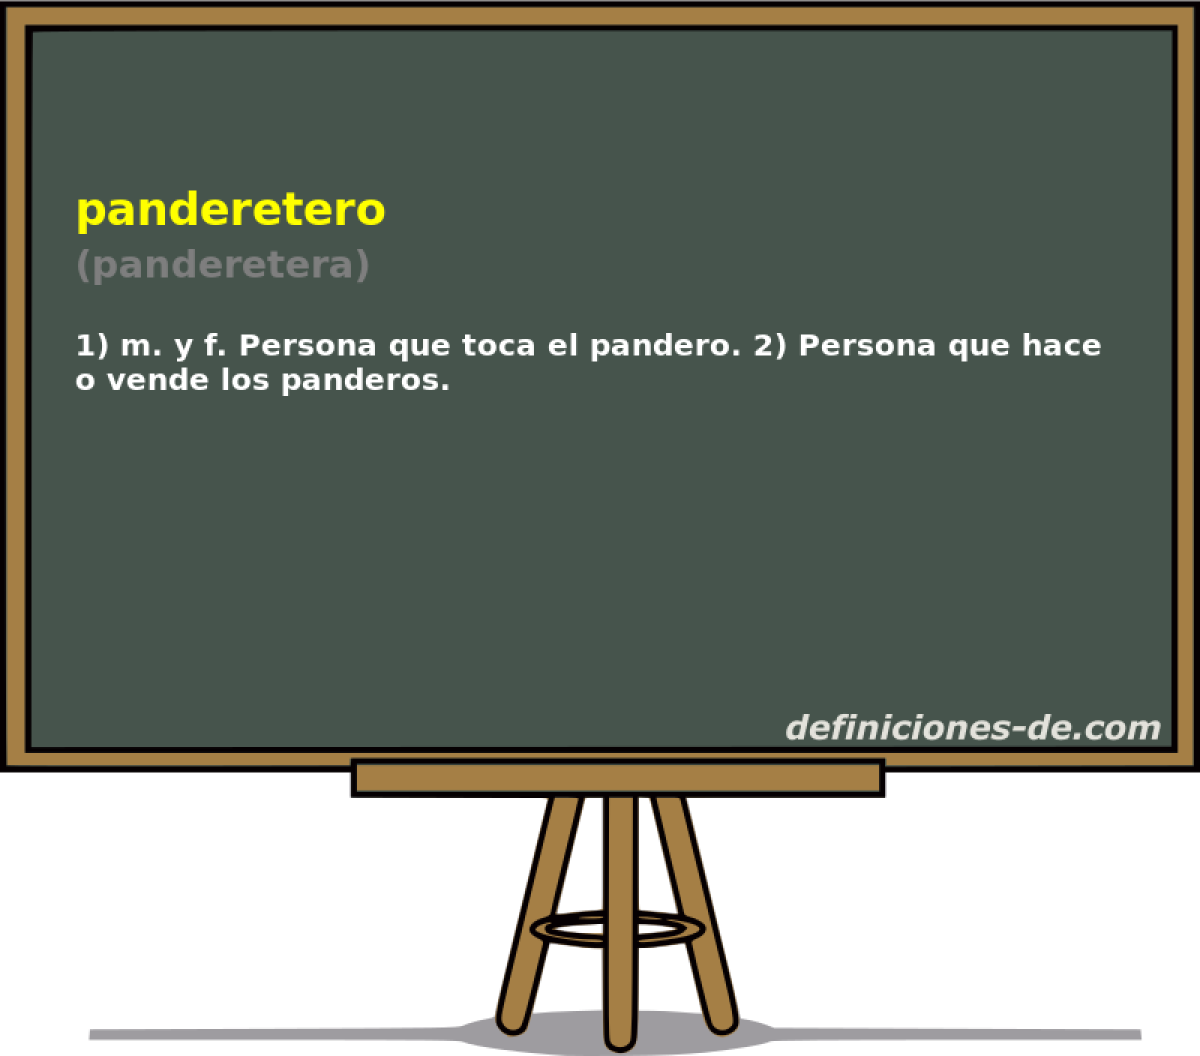 panderetero (panderetera)